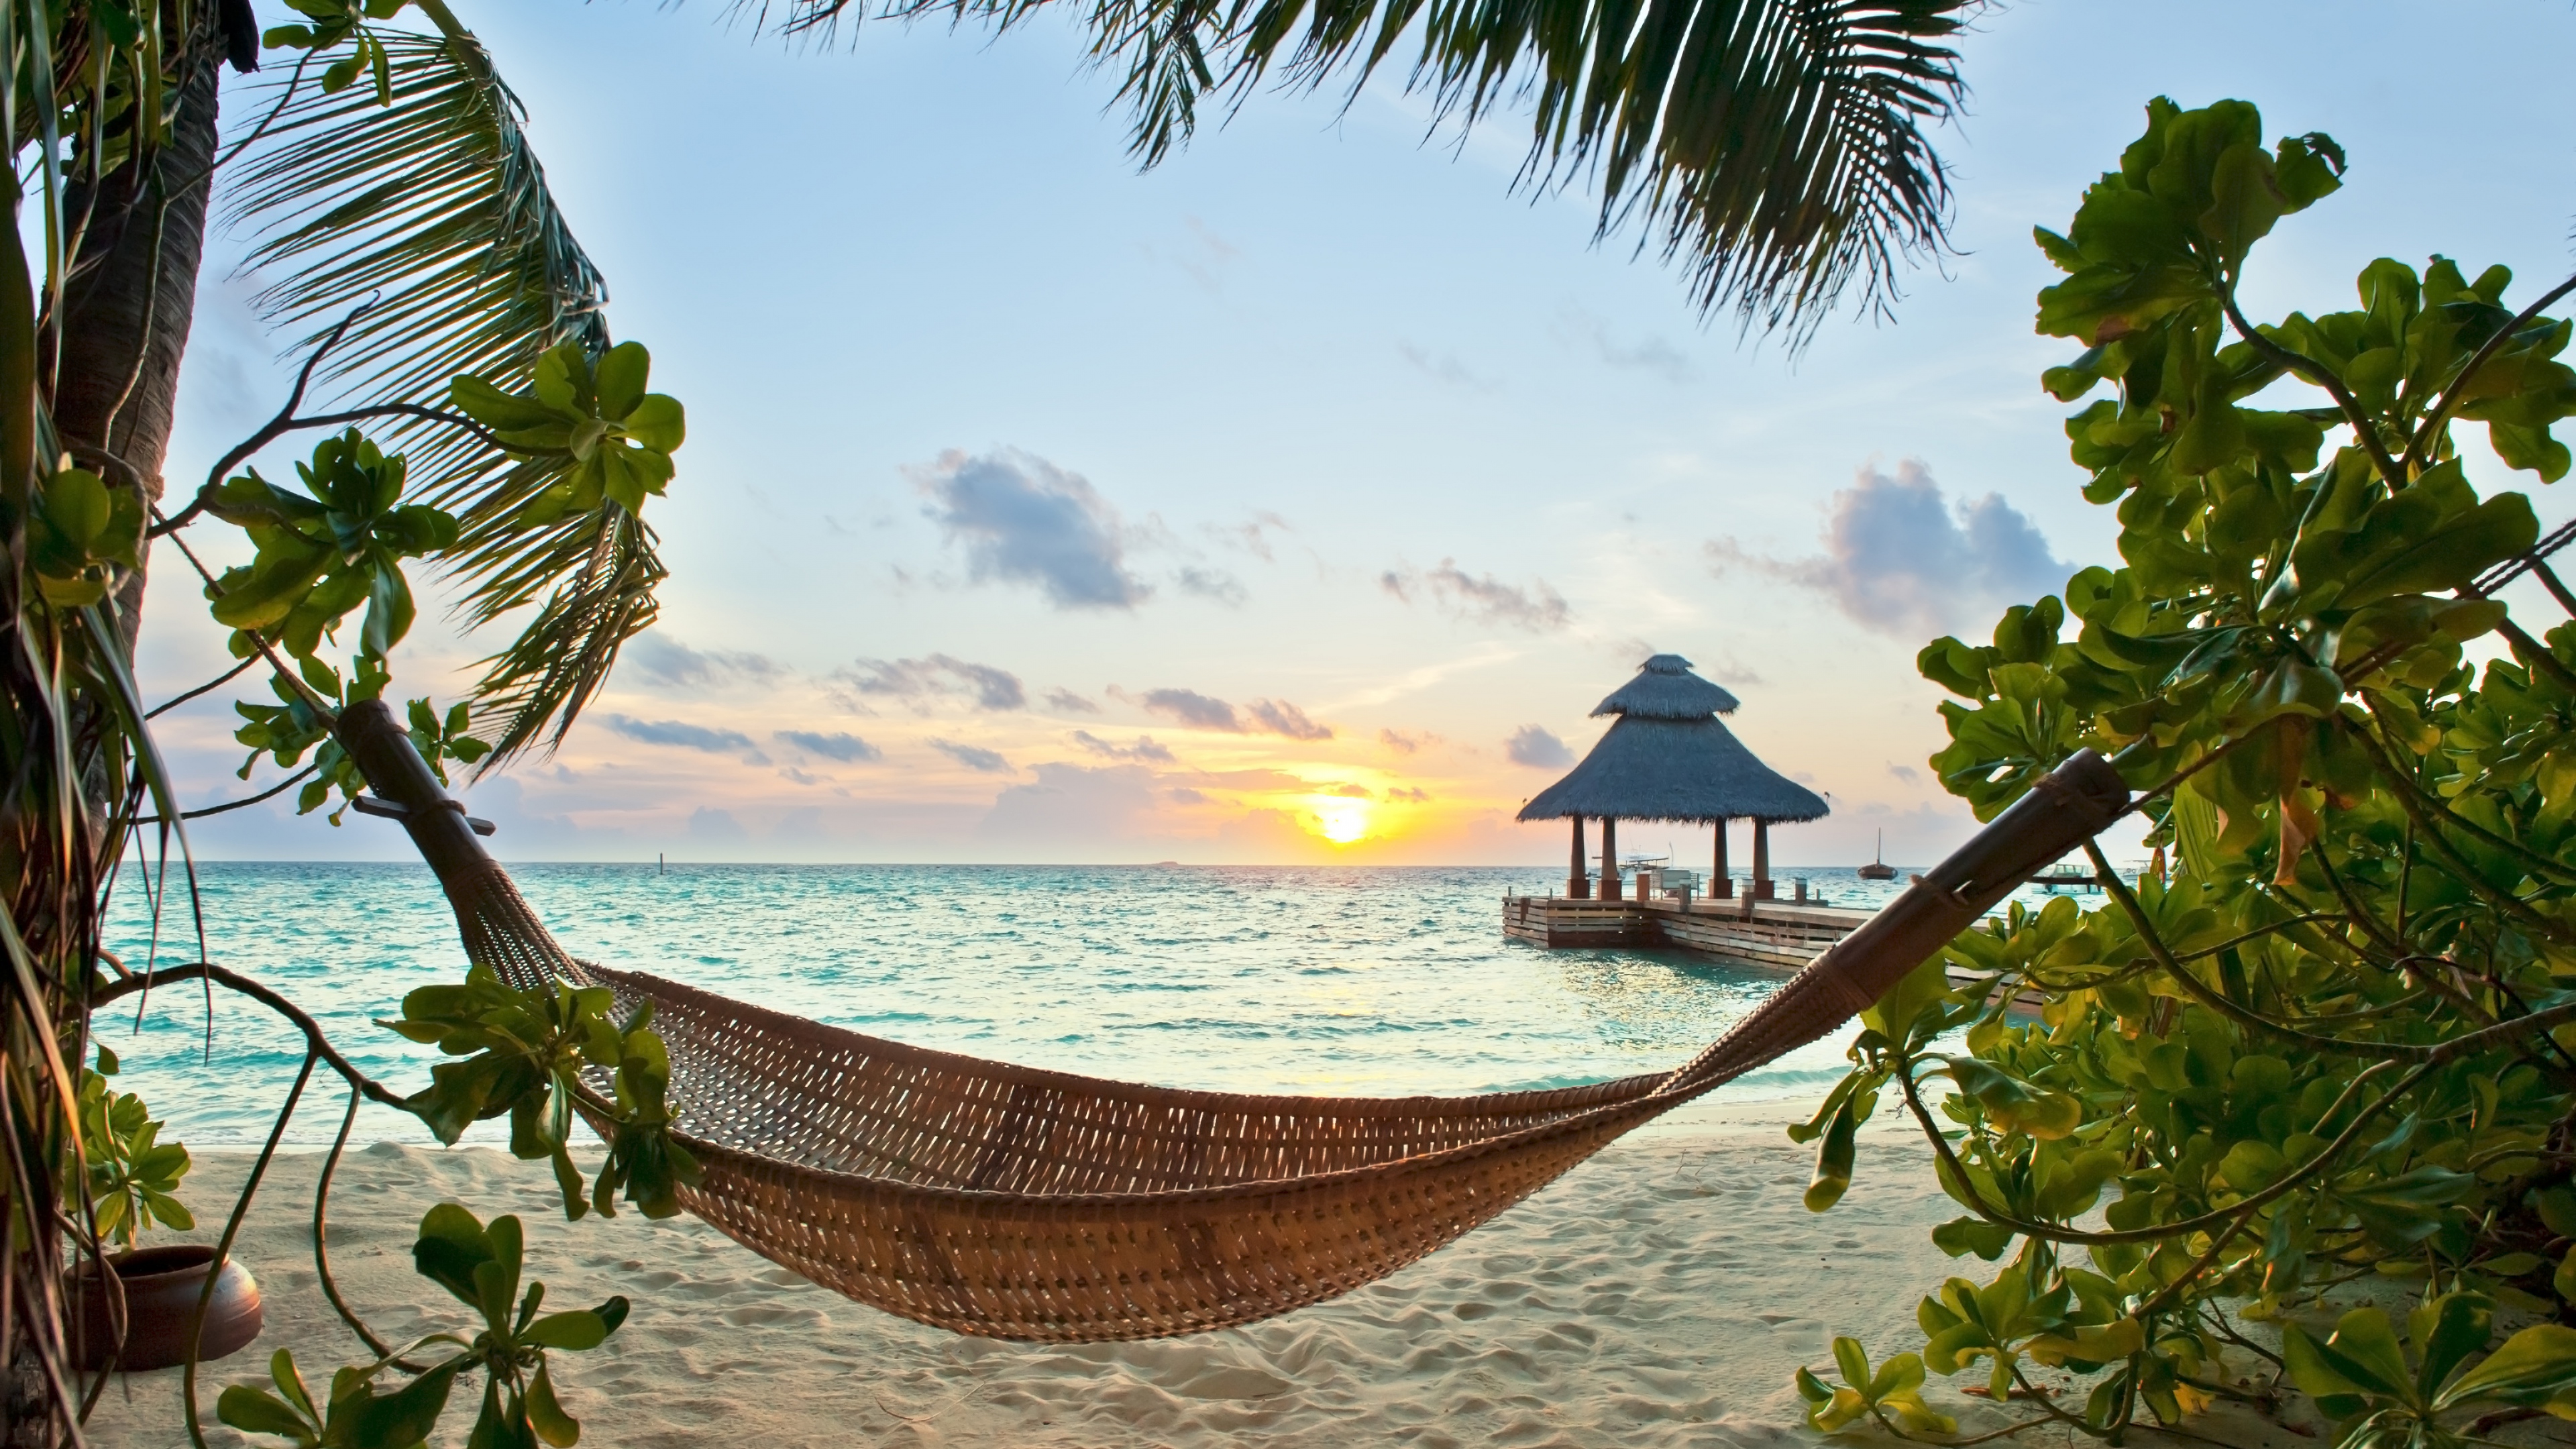 tropics, sea, sunset, beach, man made, hammock